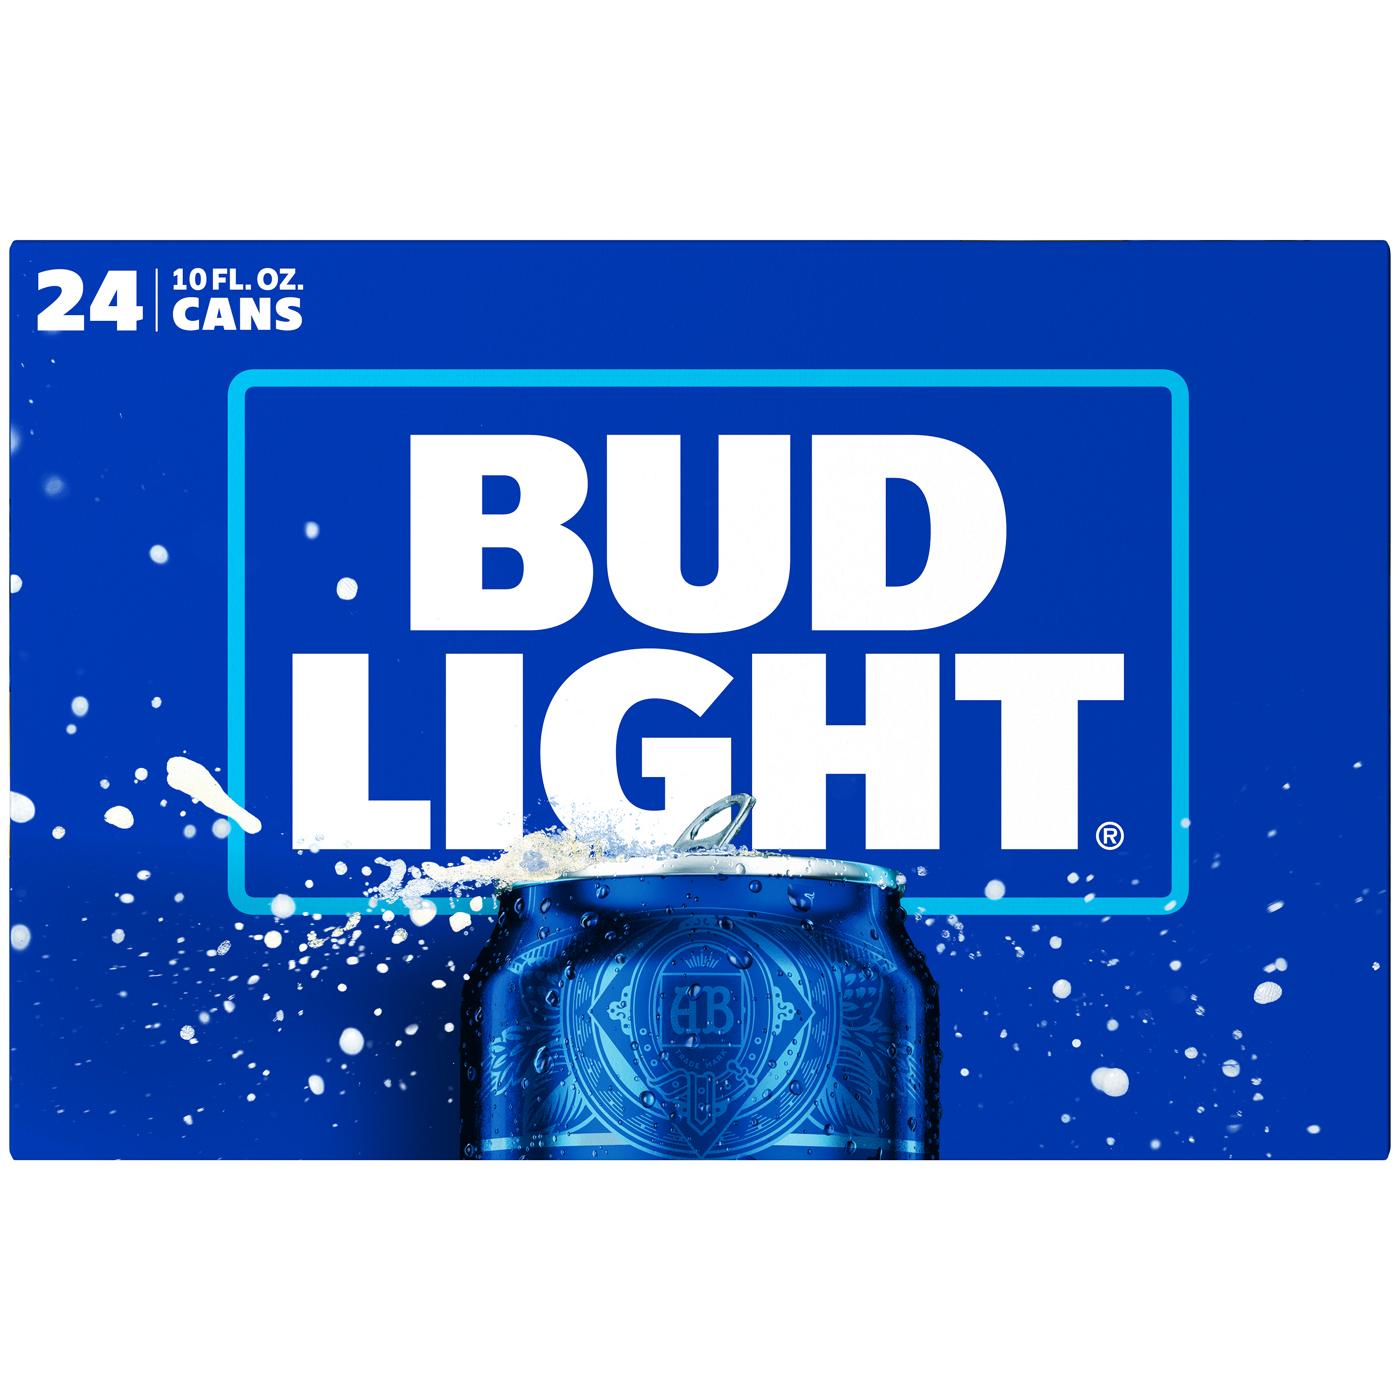 Bud Light Beer 10 oz Cans; image 2 of 2